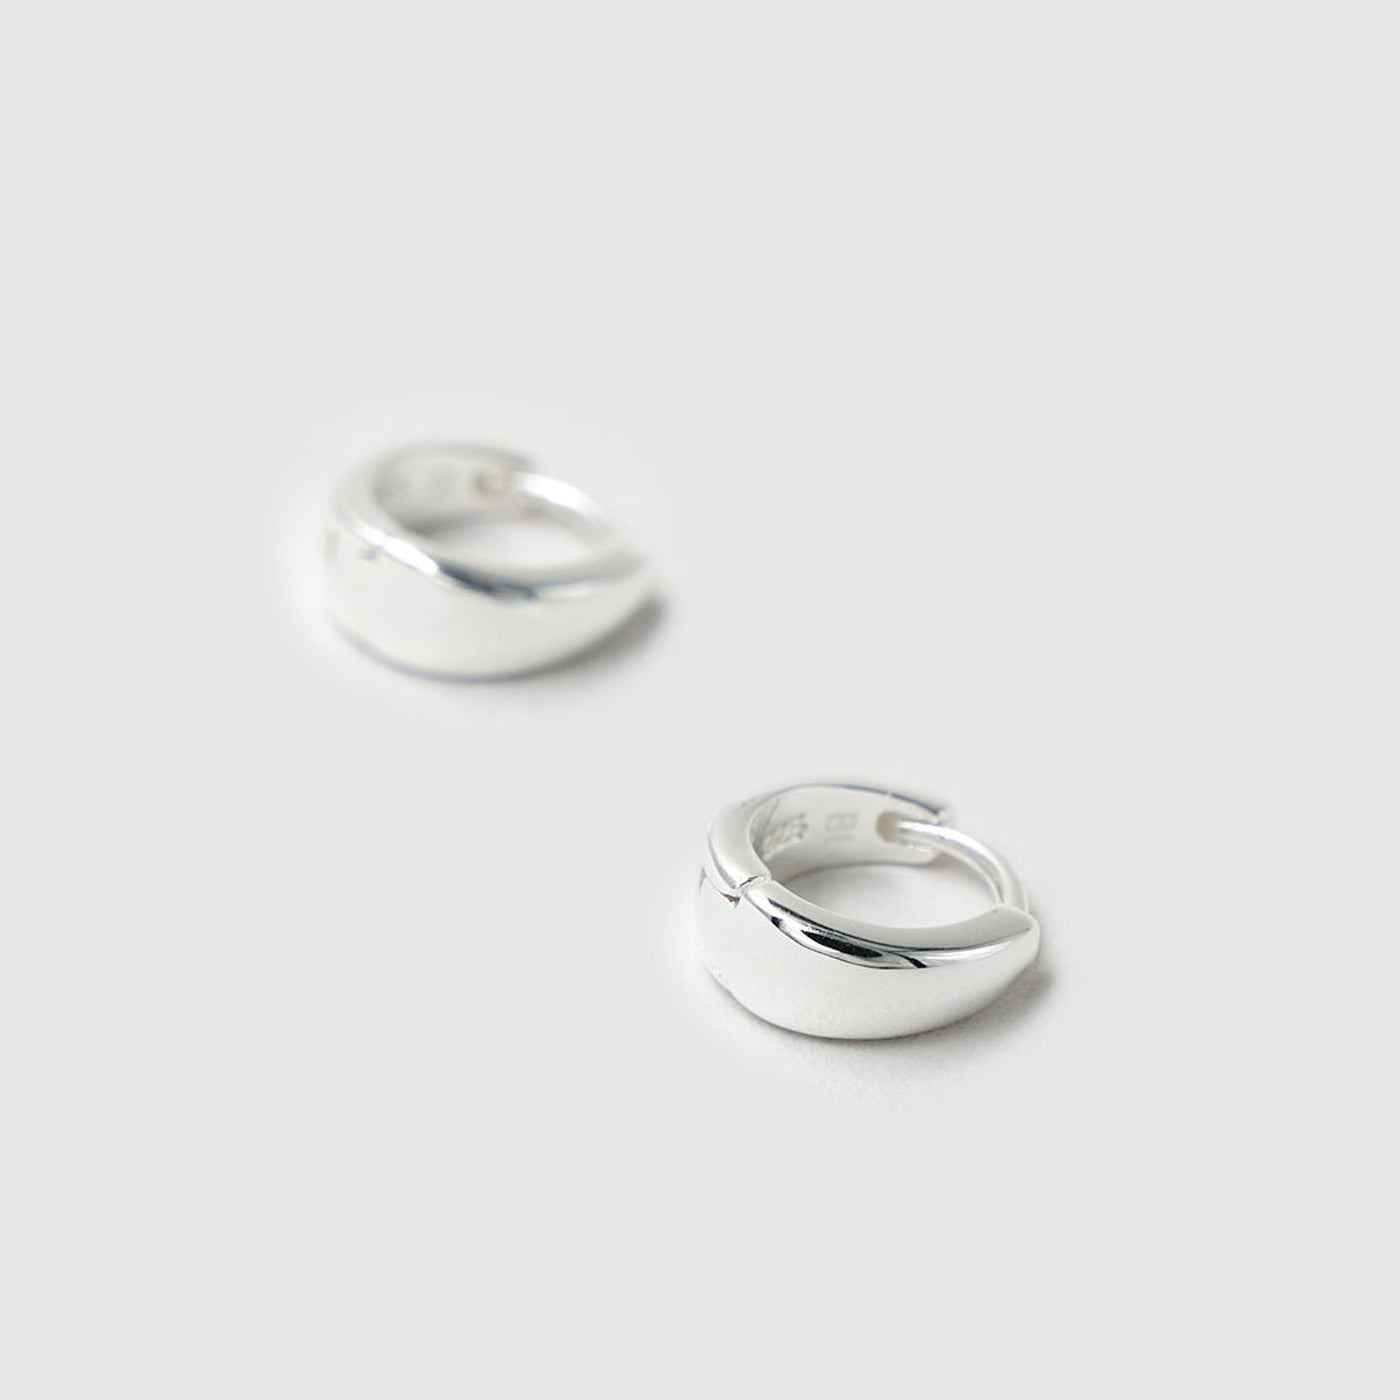 Brie Leon - Mini Curved Solid Sleeper Earrings - Silver